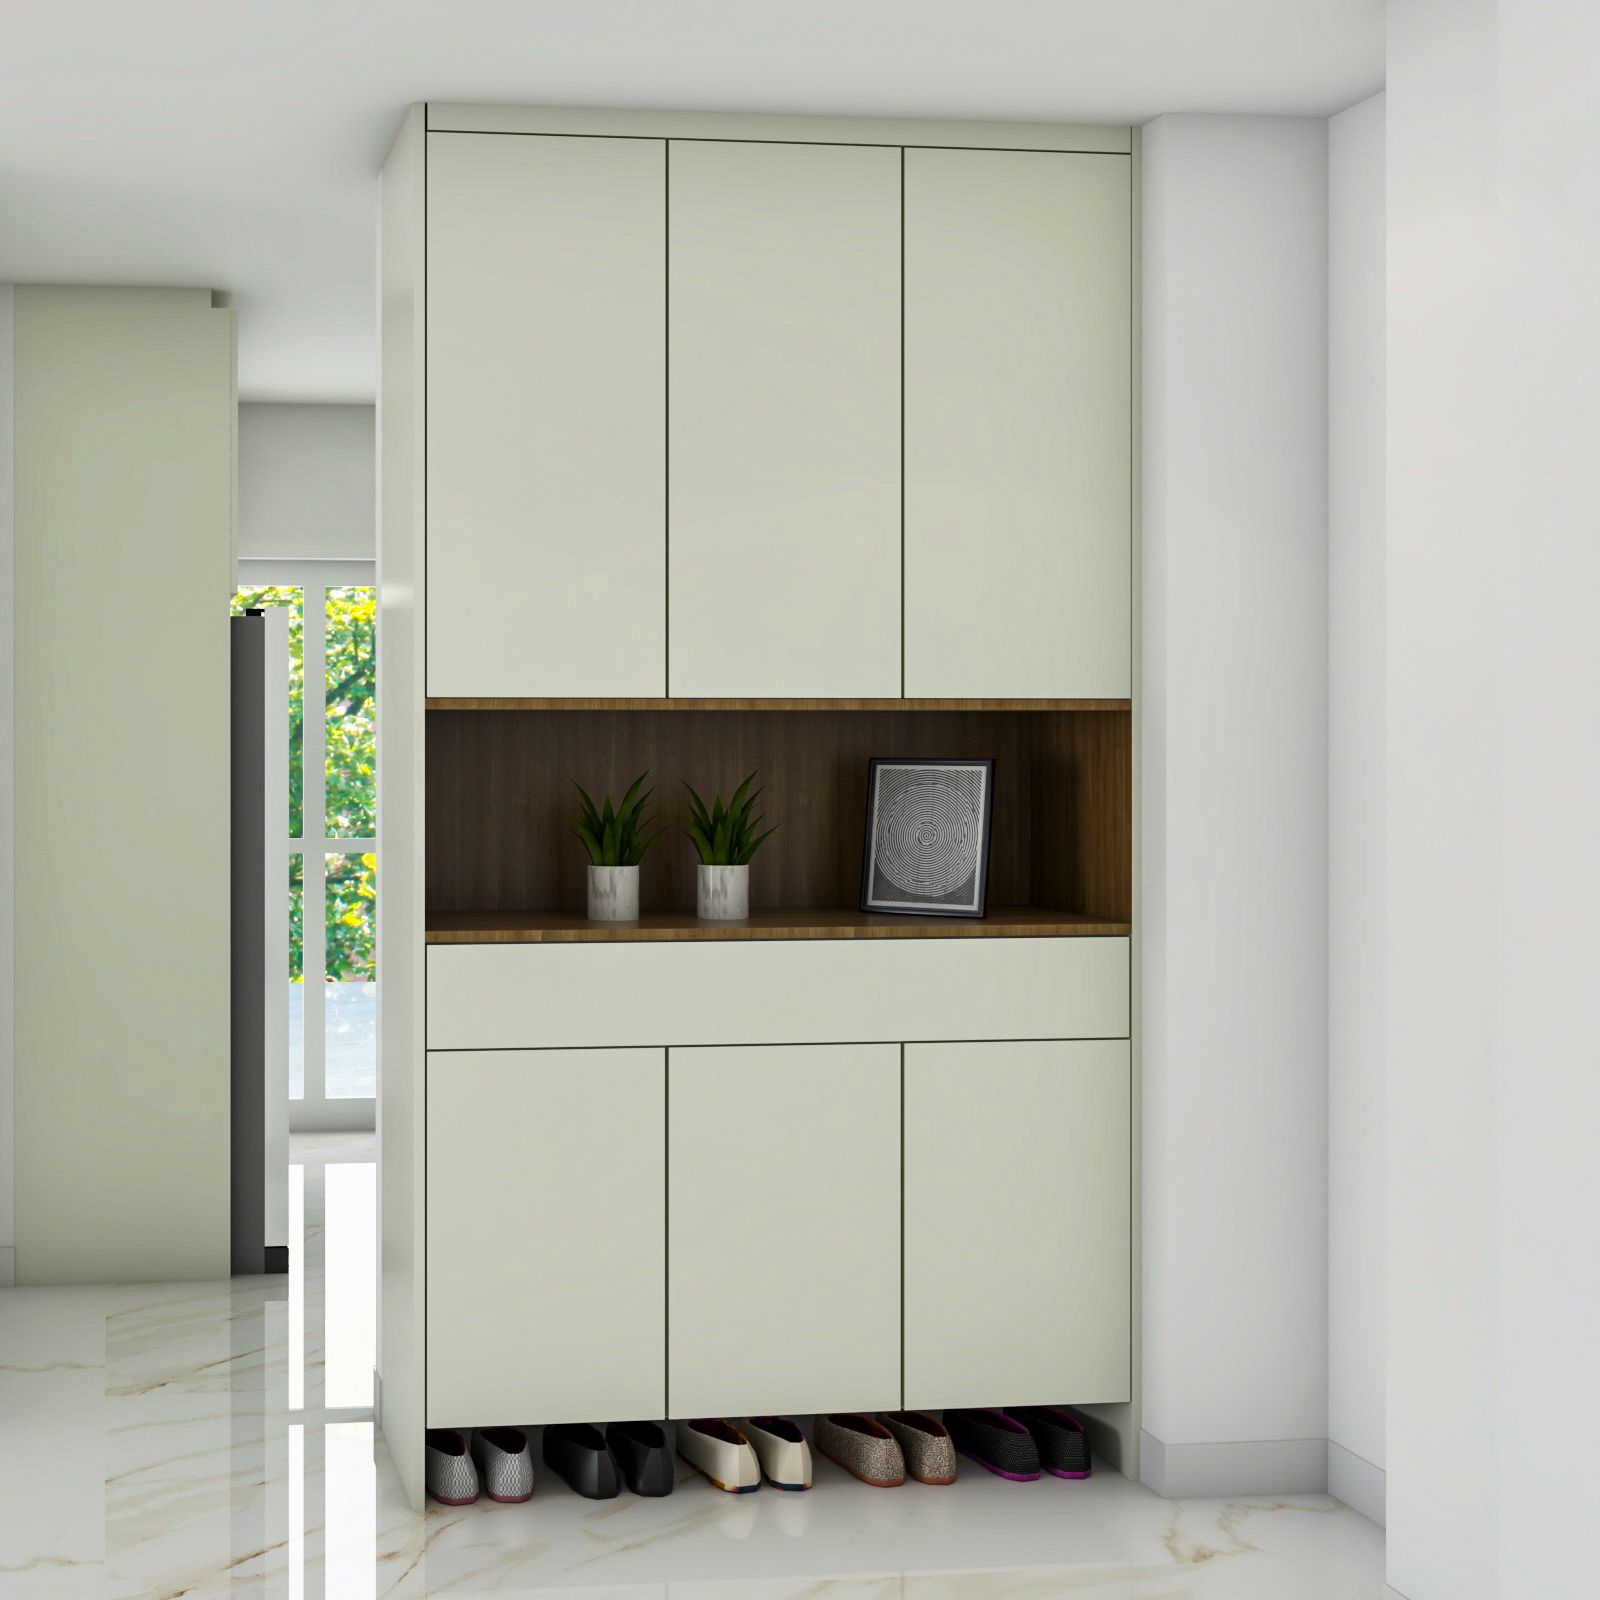 Minimalistic White Foyer Design With Ample Storage